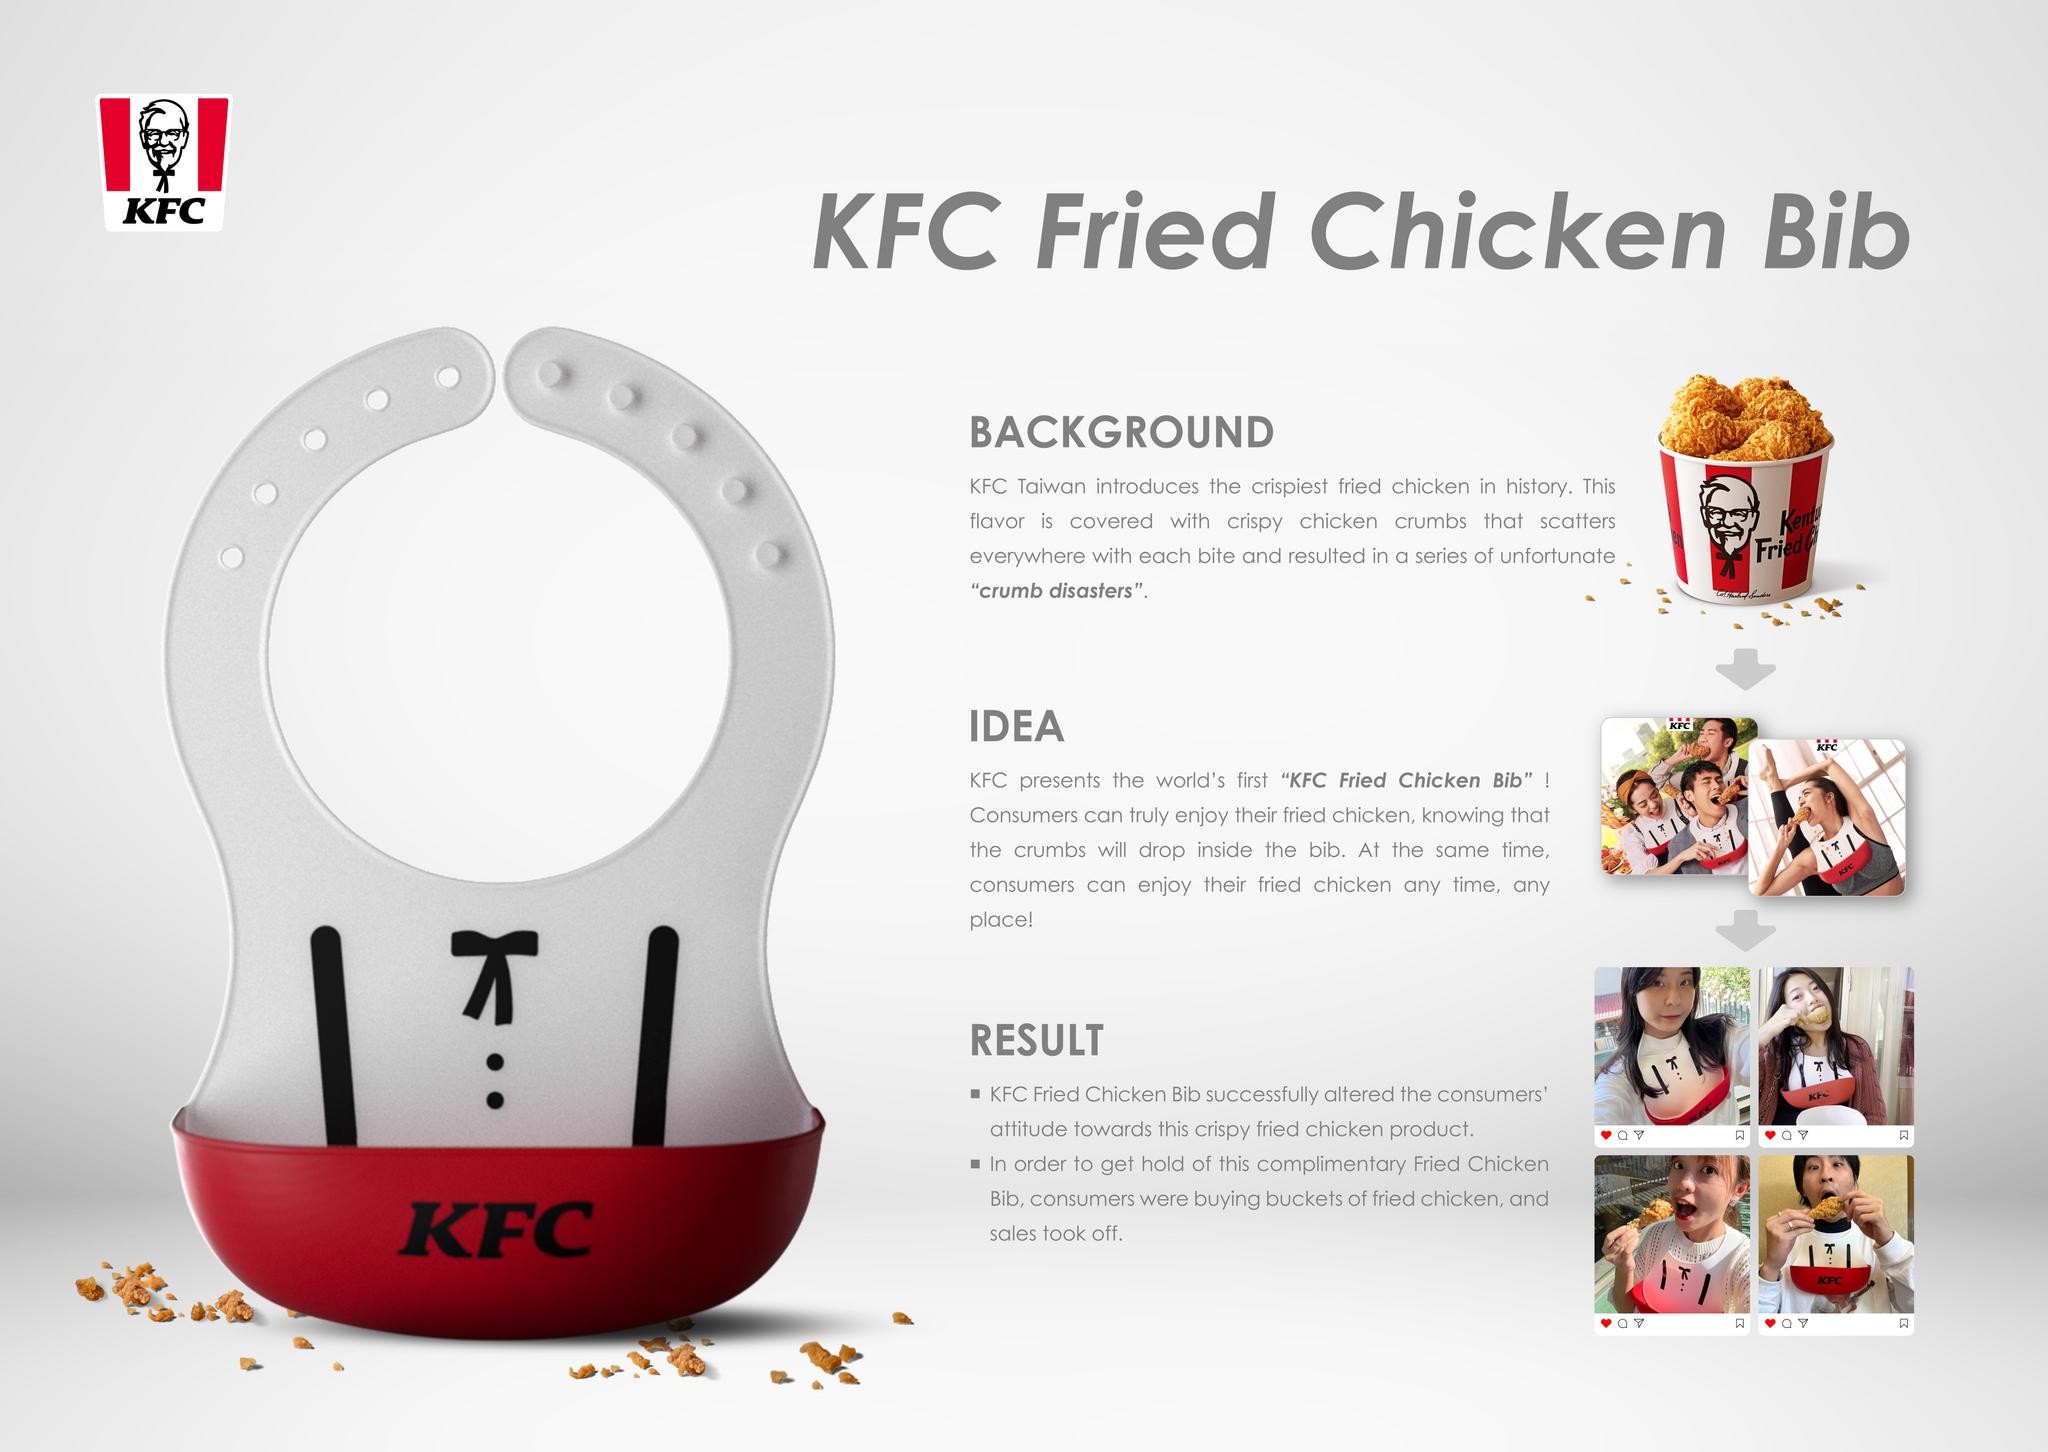 KFC Fried Chicken Bib